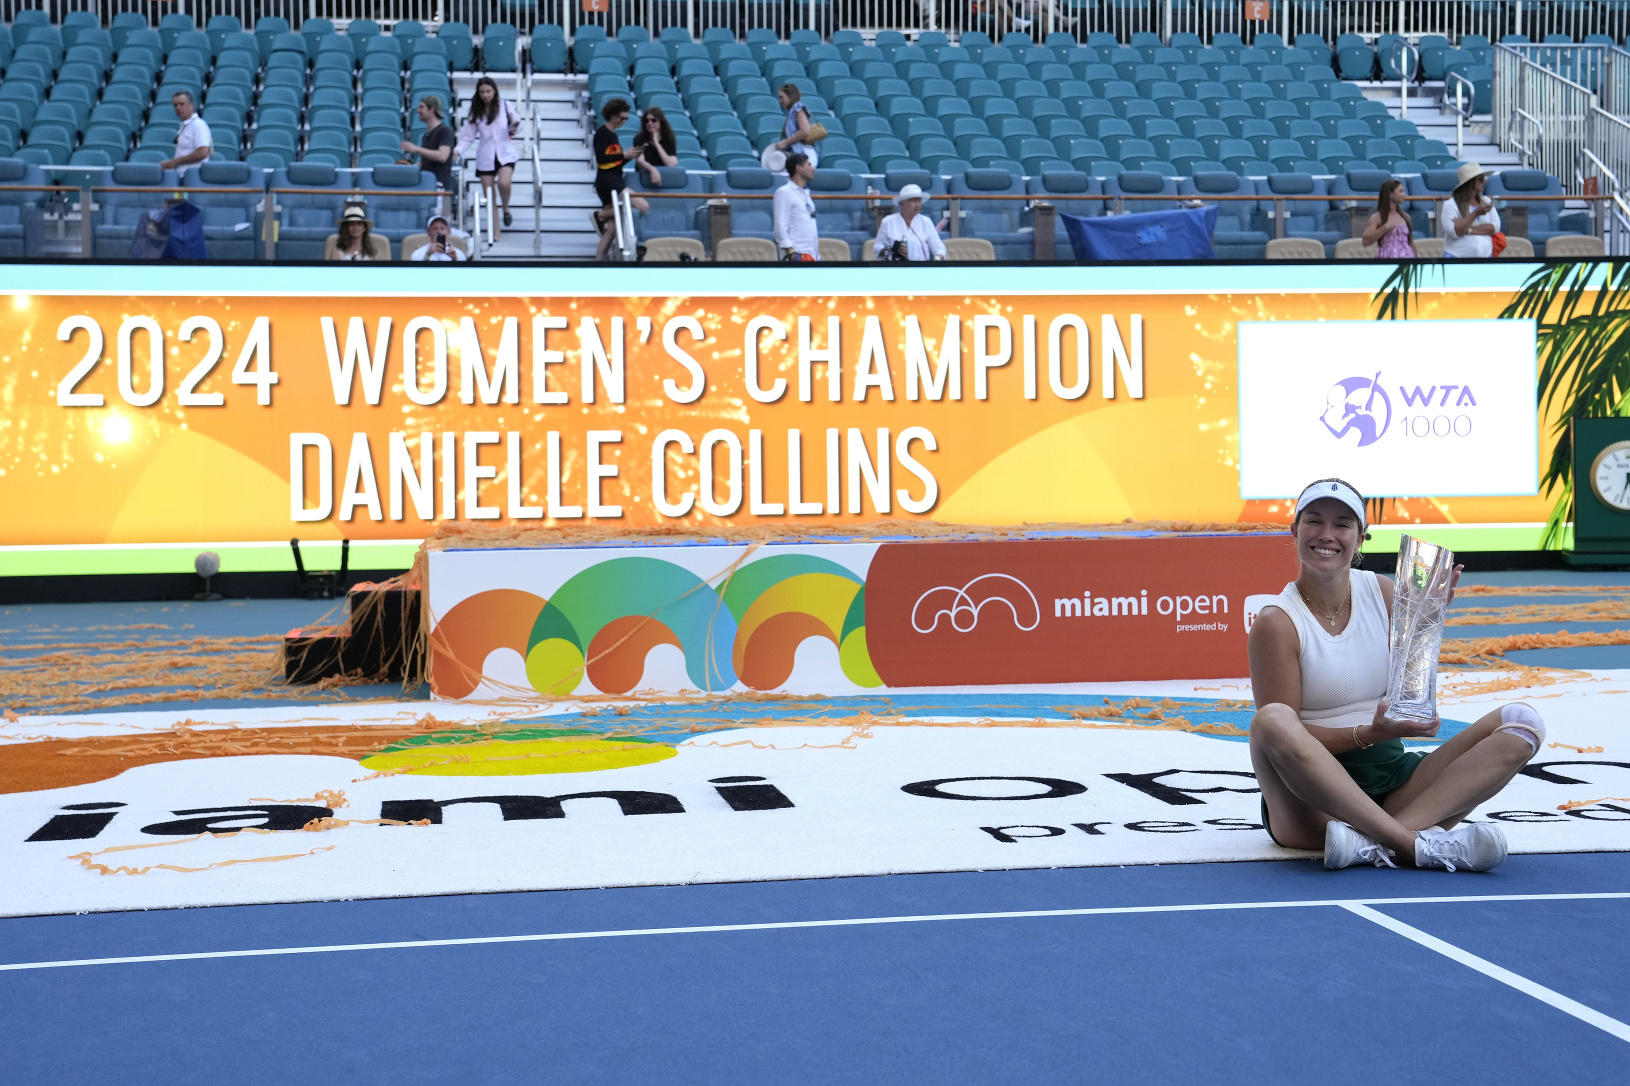 Danielle Collinsová oslavuje titul